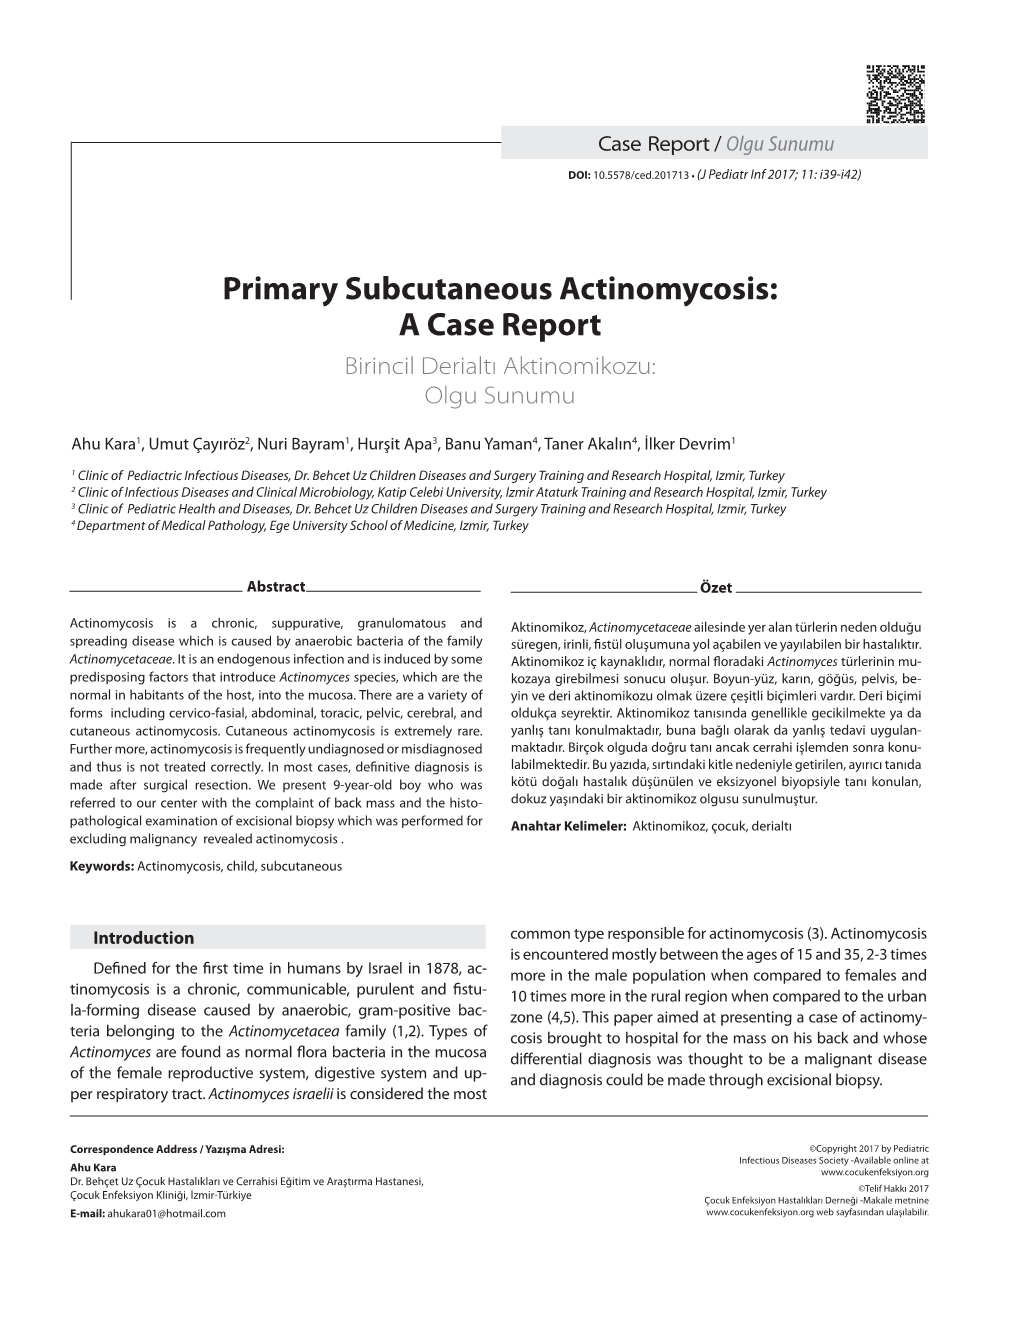 Primary Subcutaneous Actinomycosis: a Case Report Birincil Derialtı Aktinomikozu: Olgu Sunumu